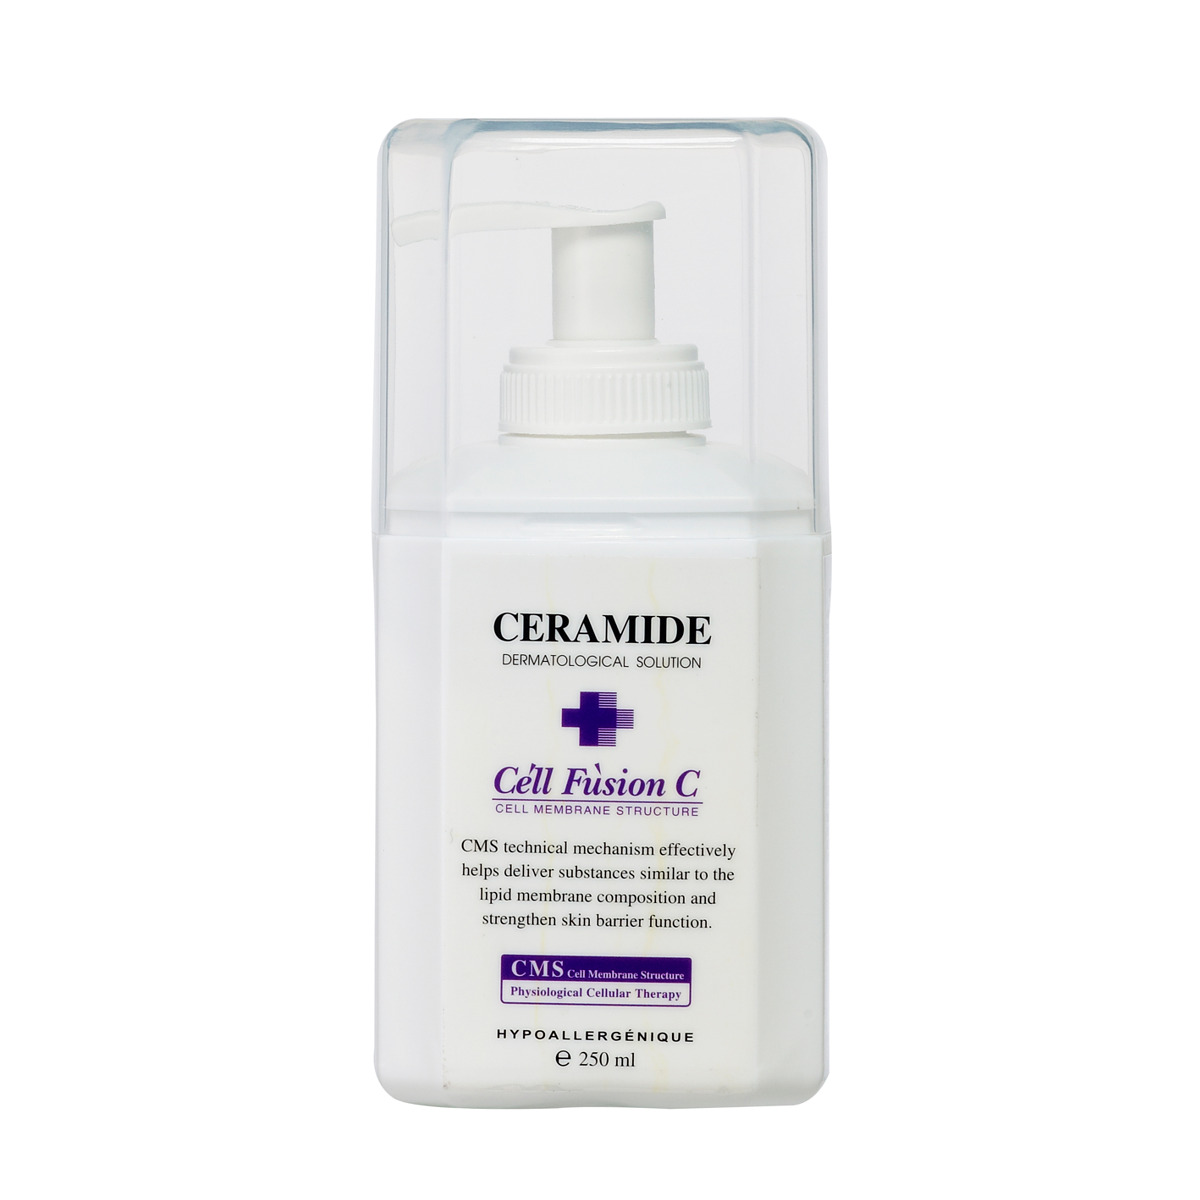 Giinsy Ceramide. Cosme Company Unlabeled Laboratory Ceramide Essence. Ceramide gel